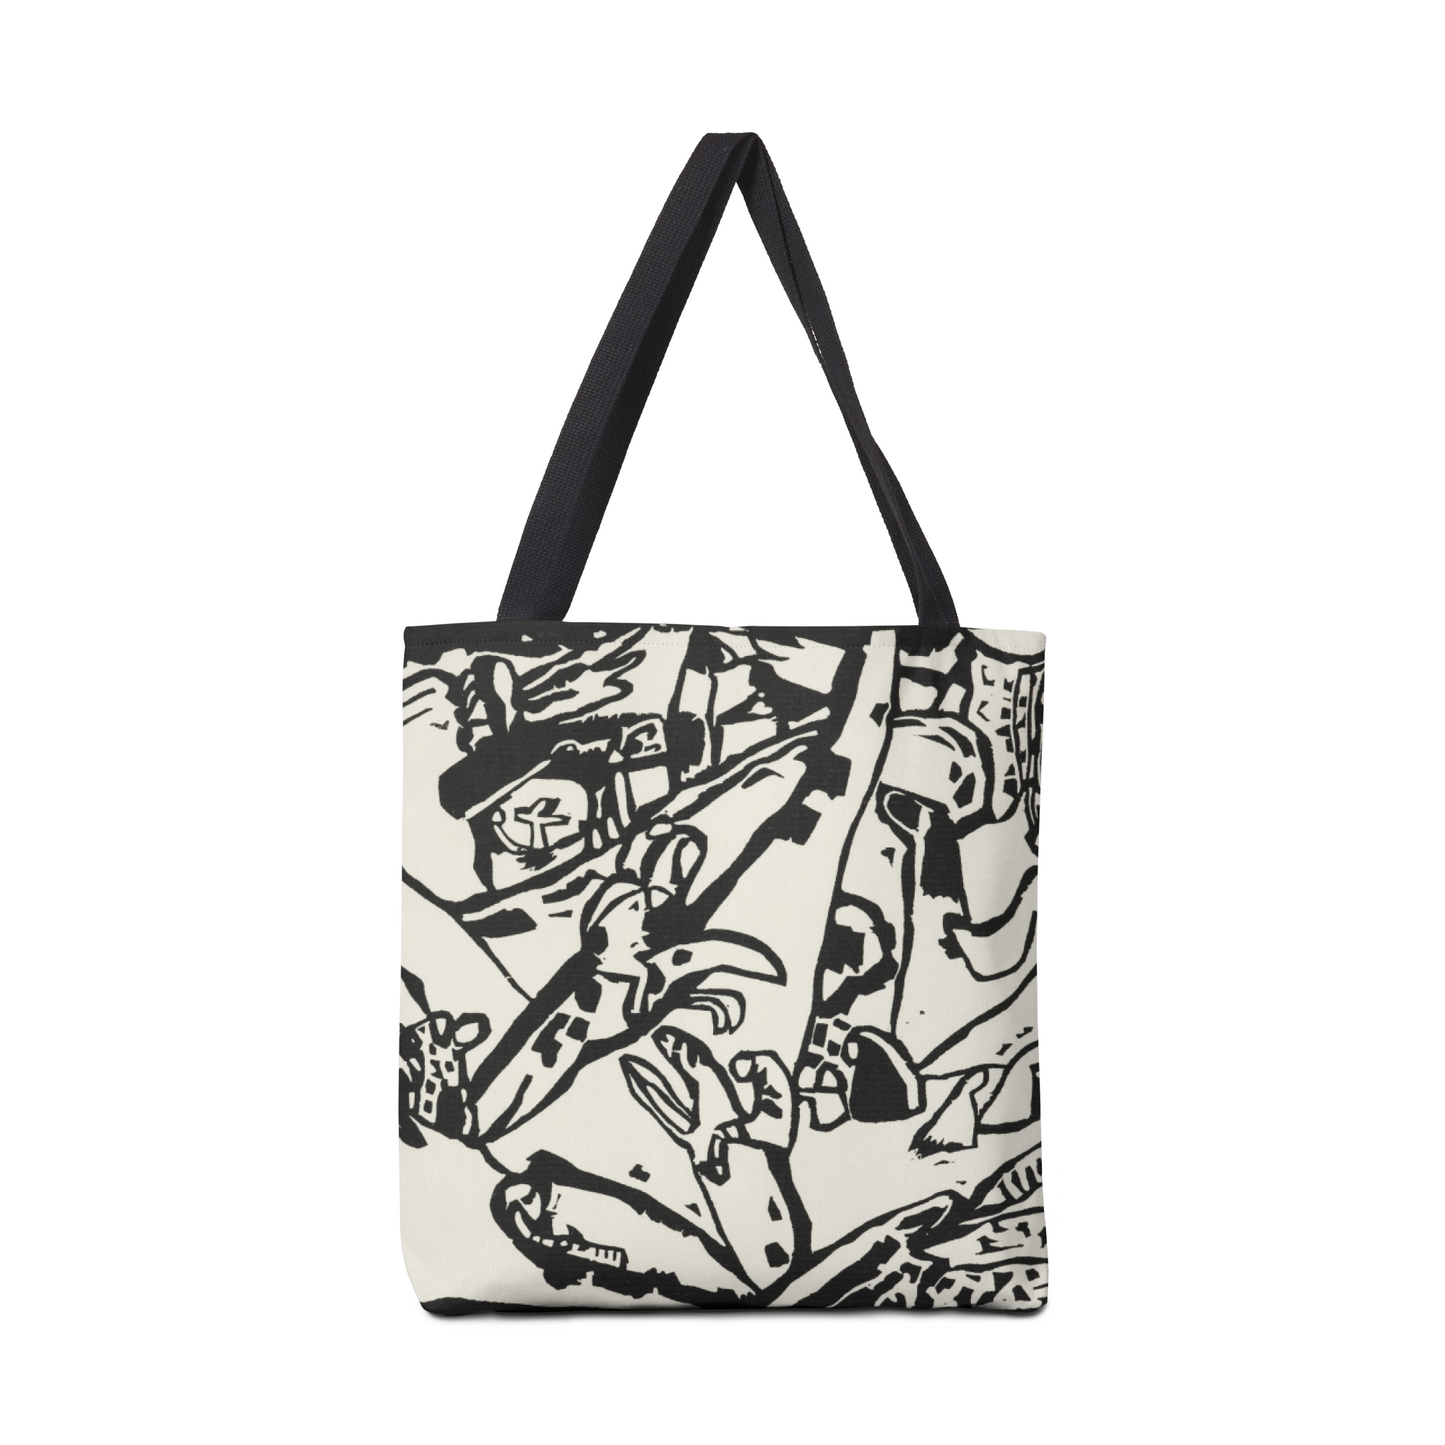 Kandinsky Composition 2 Tote Bag